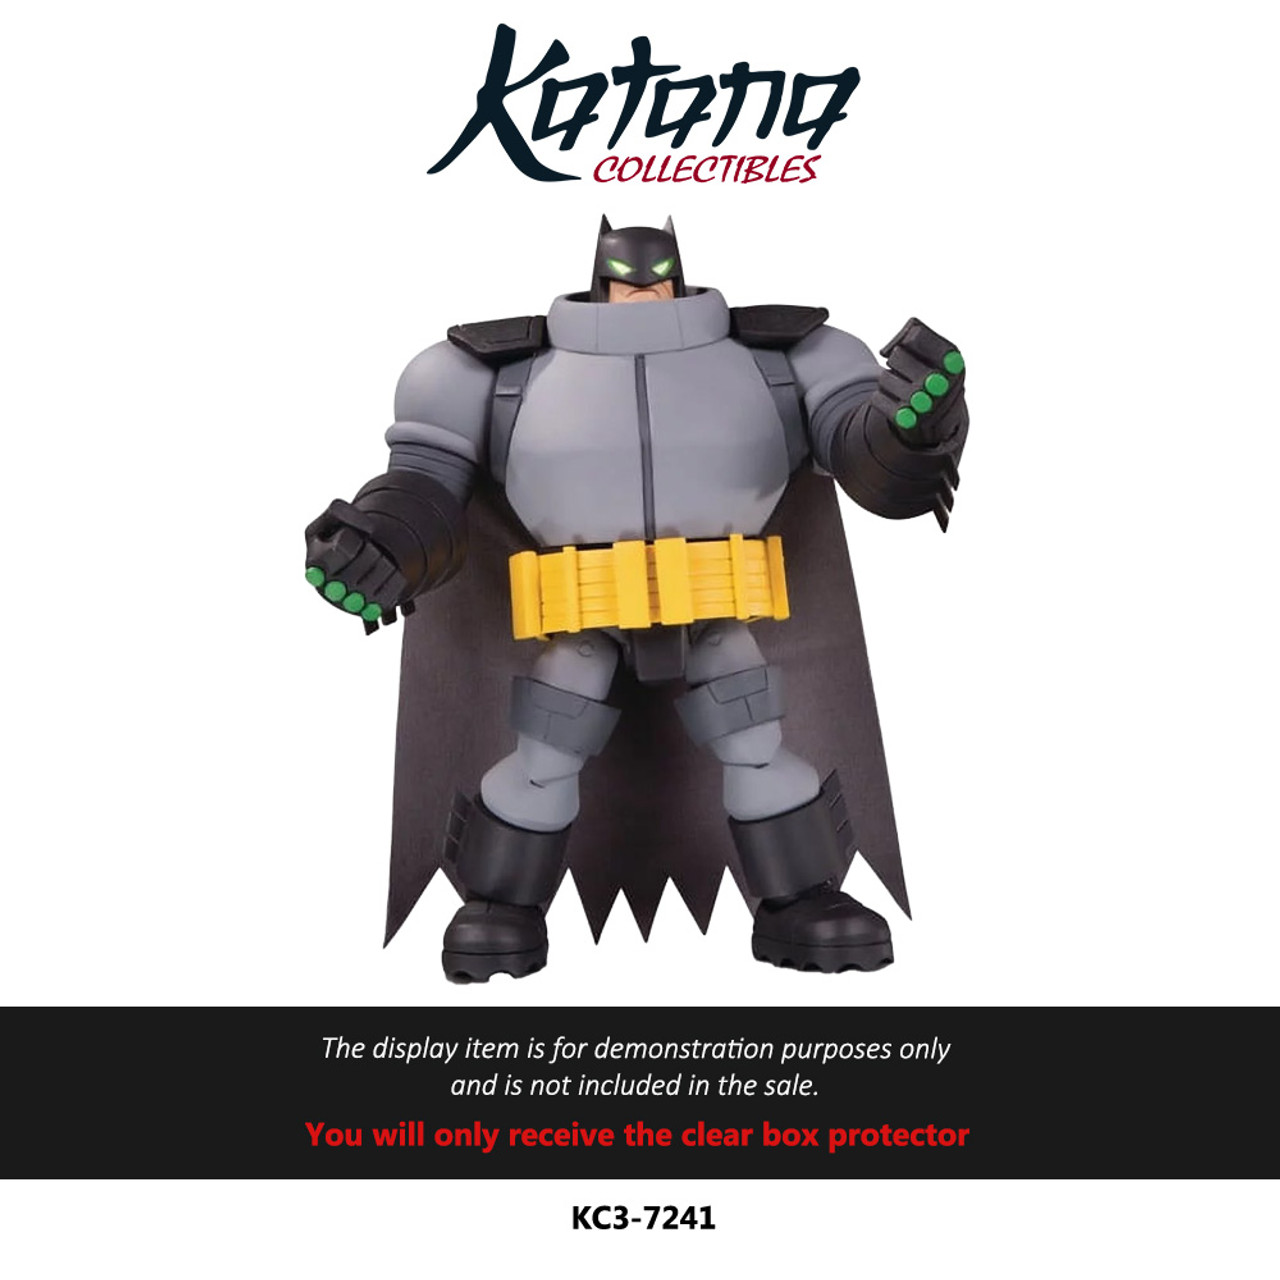 Katana Collectibles Protector For DC Direct Batman The Adventures Continue Super Armor Batman Figure